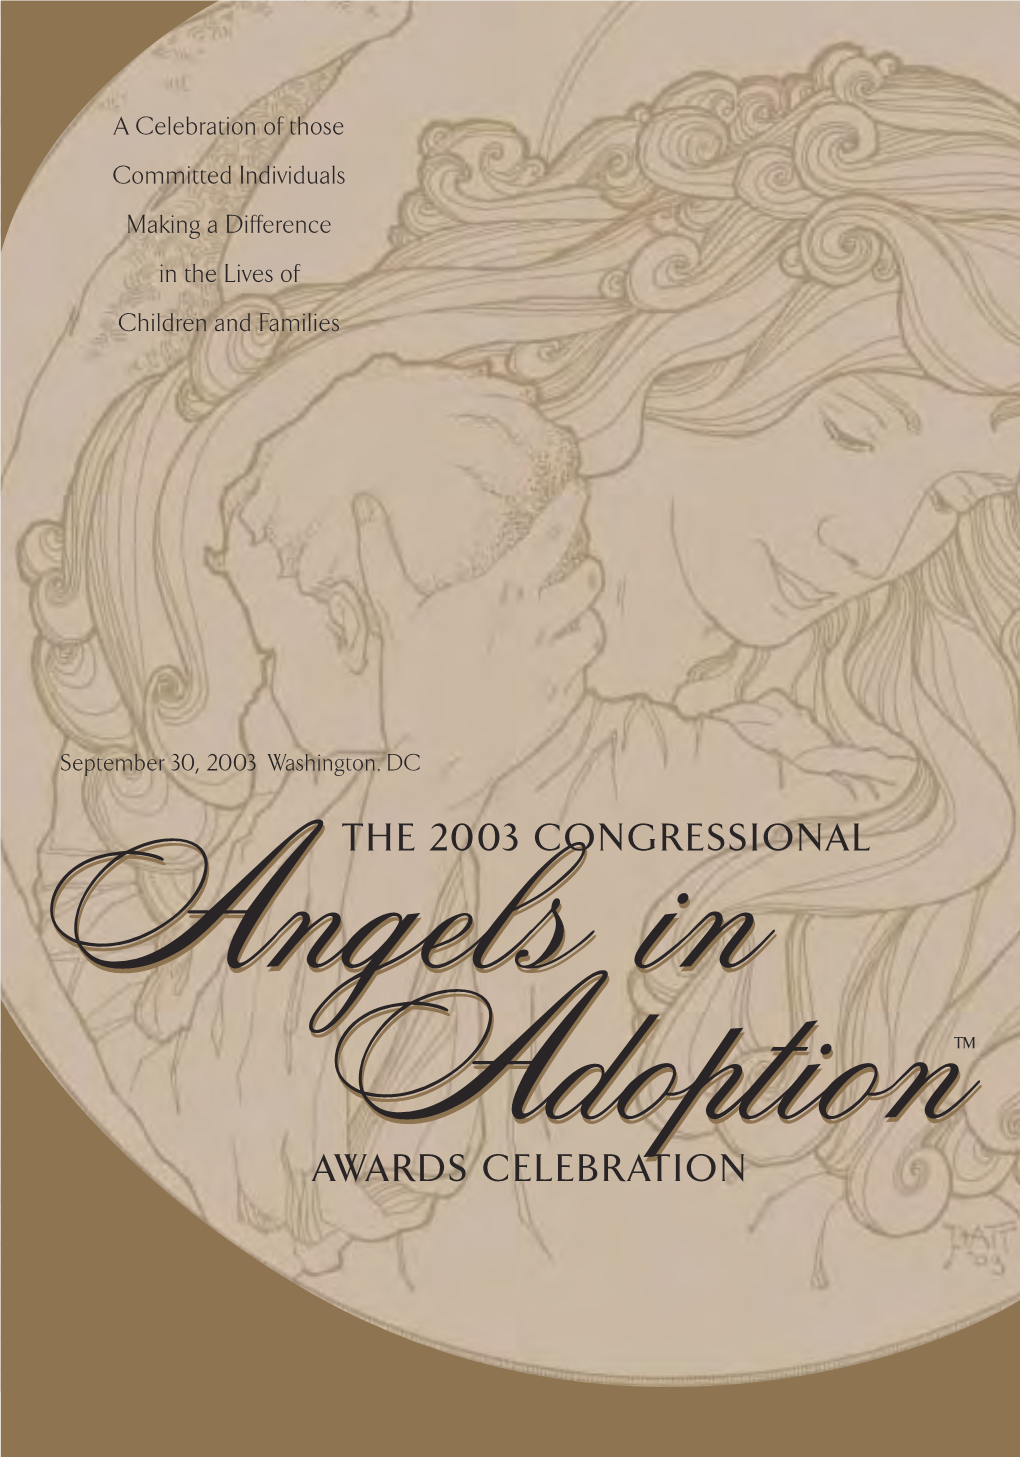 The 2003 Congressional Awards Celebration